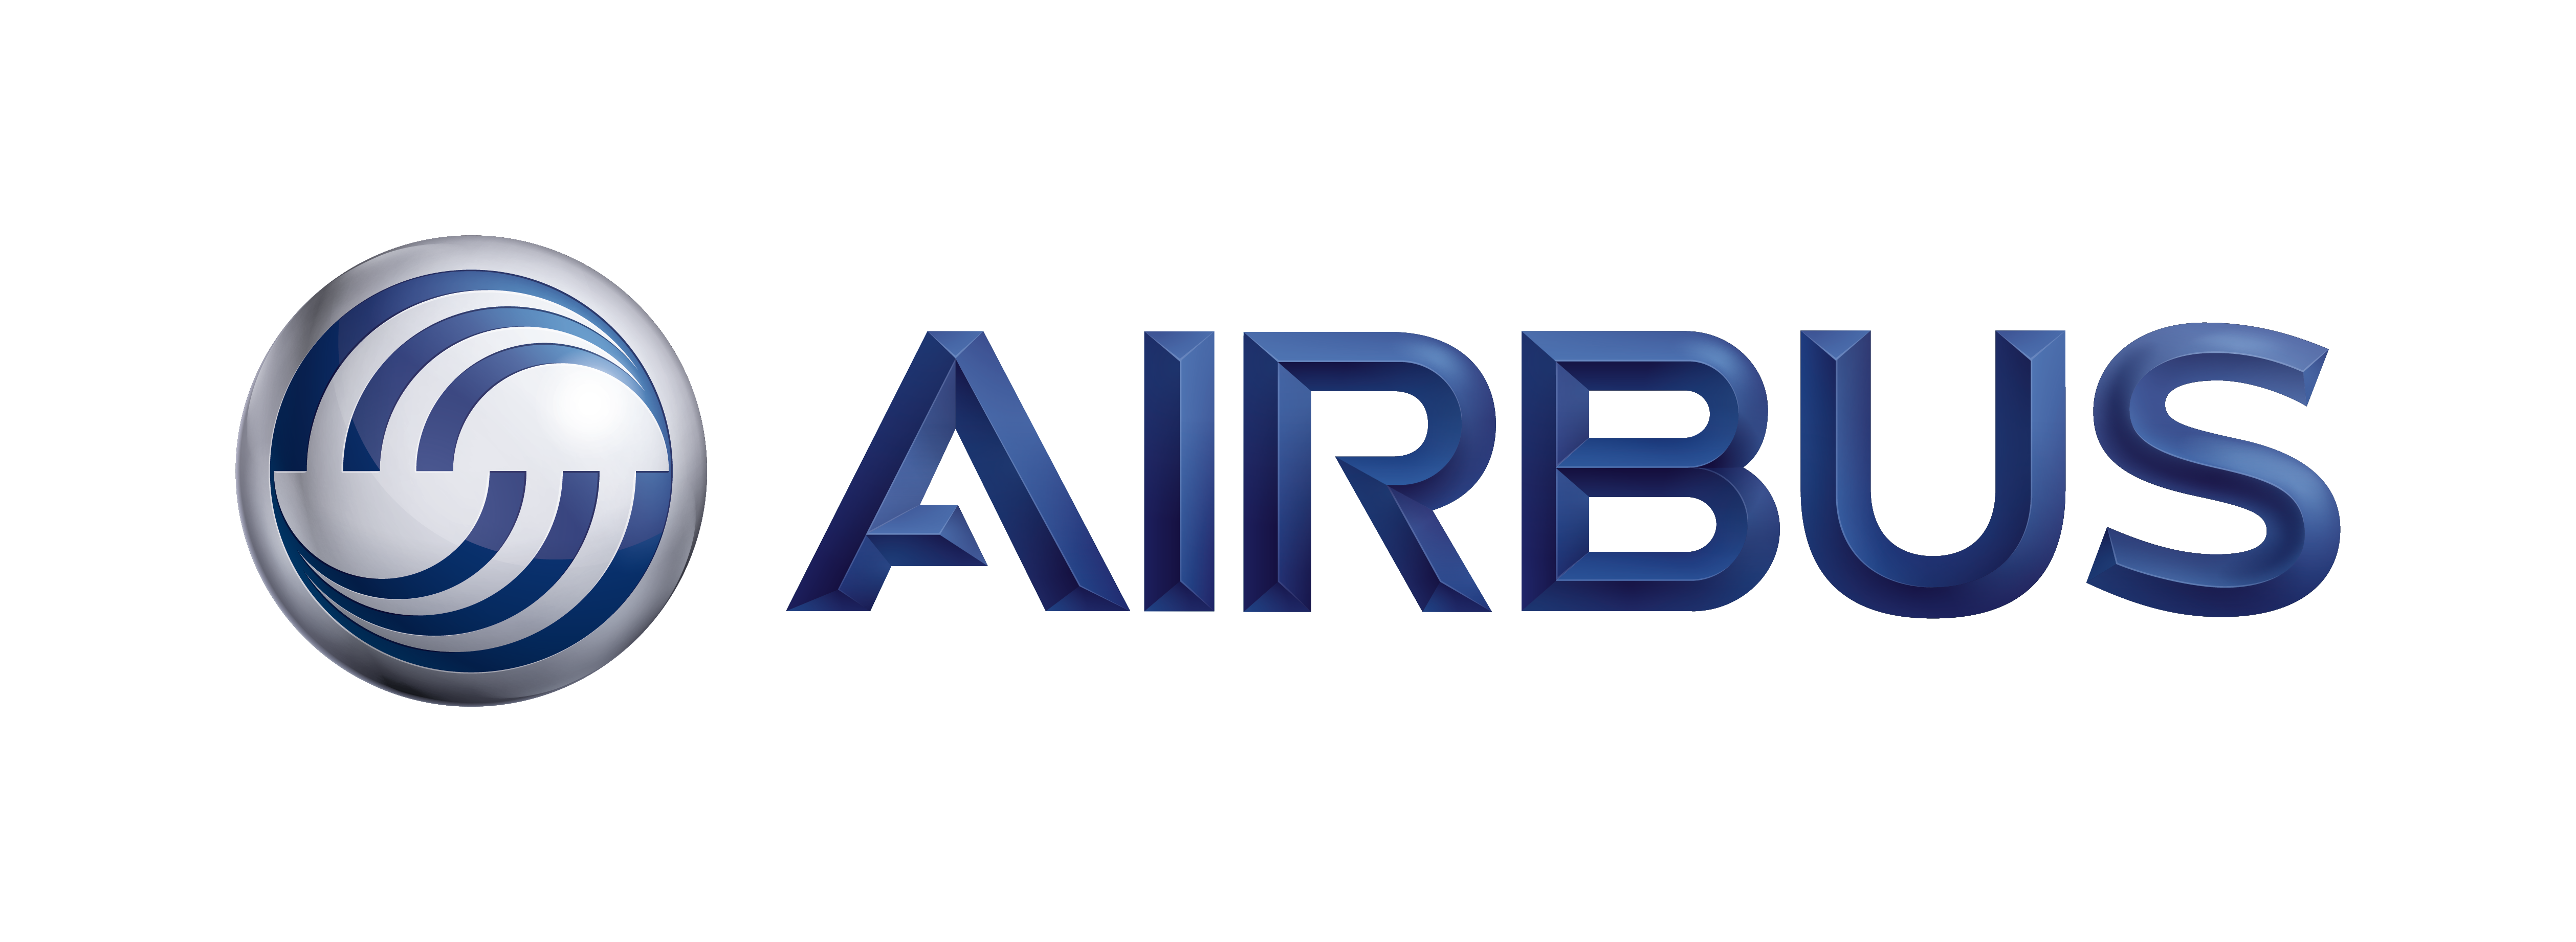 Airbus Logo Png - Airbus, Transparent background PNG HD thumbnail